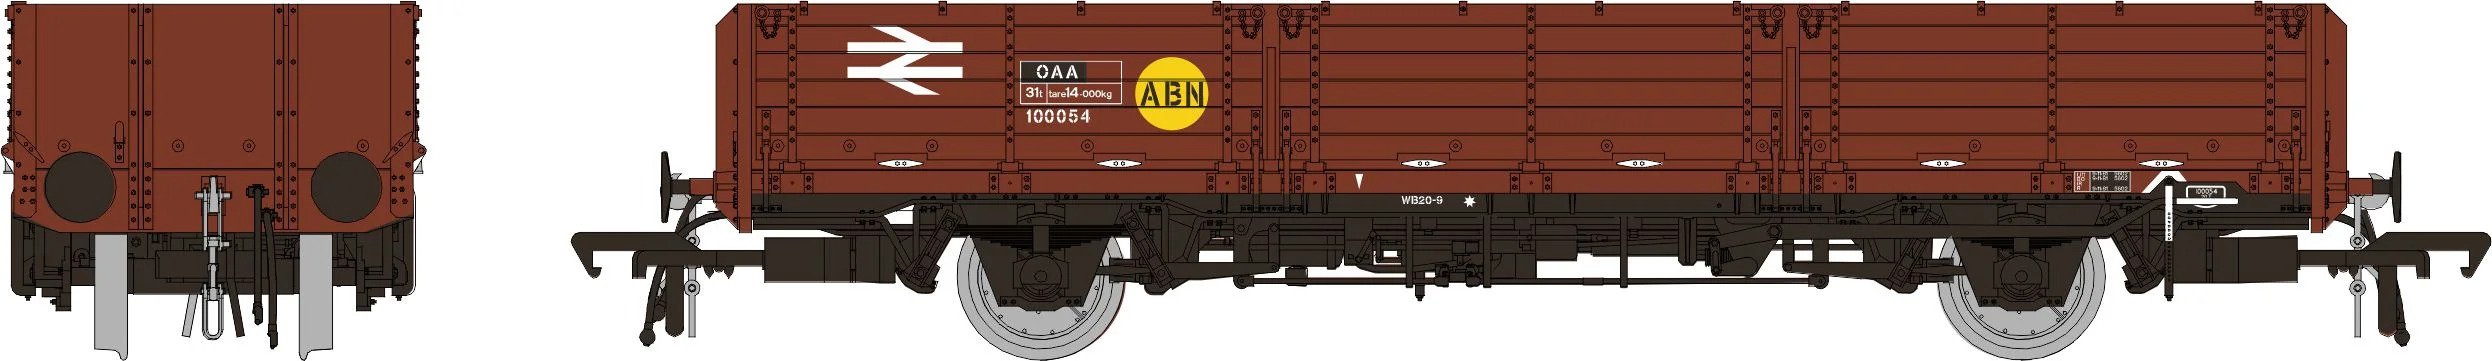 Rapido Trains 915003 OAA No. 100054, BR bauxite